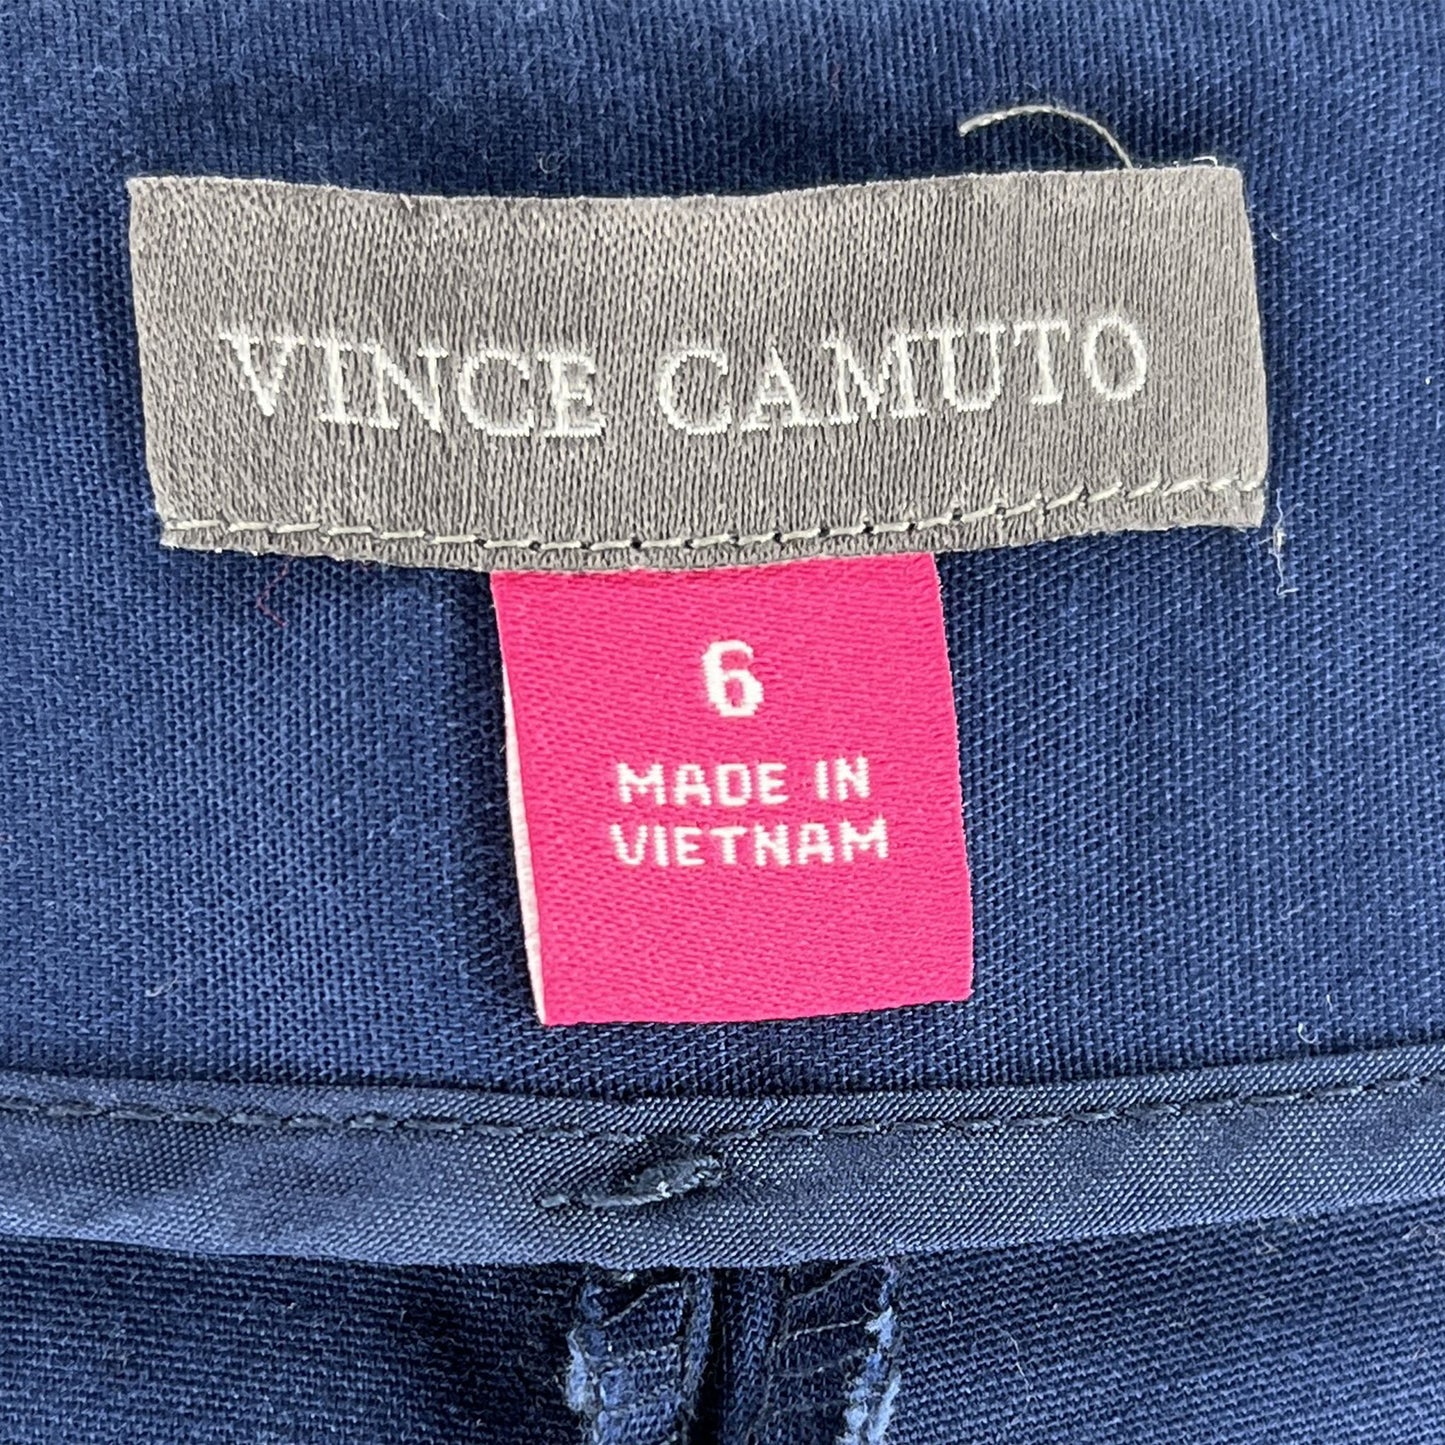 Vince Camuto Dress Pants Side-Zipper Enclosure Blue Size 6 SKU 000415